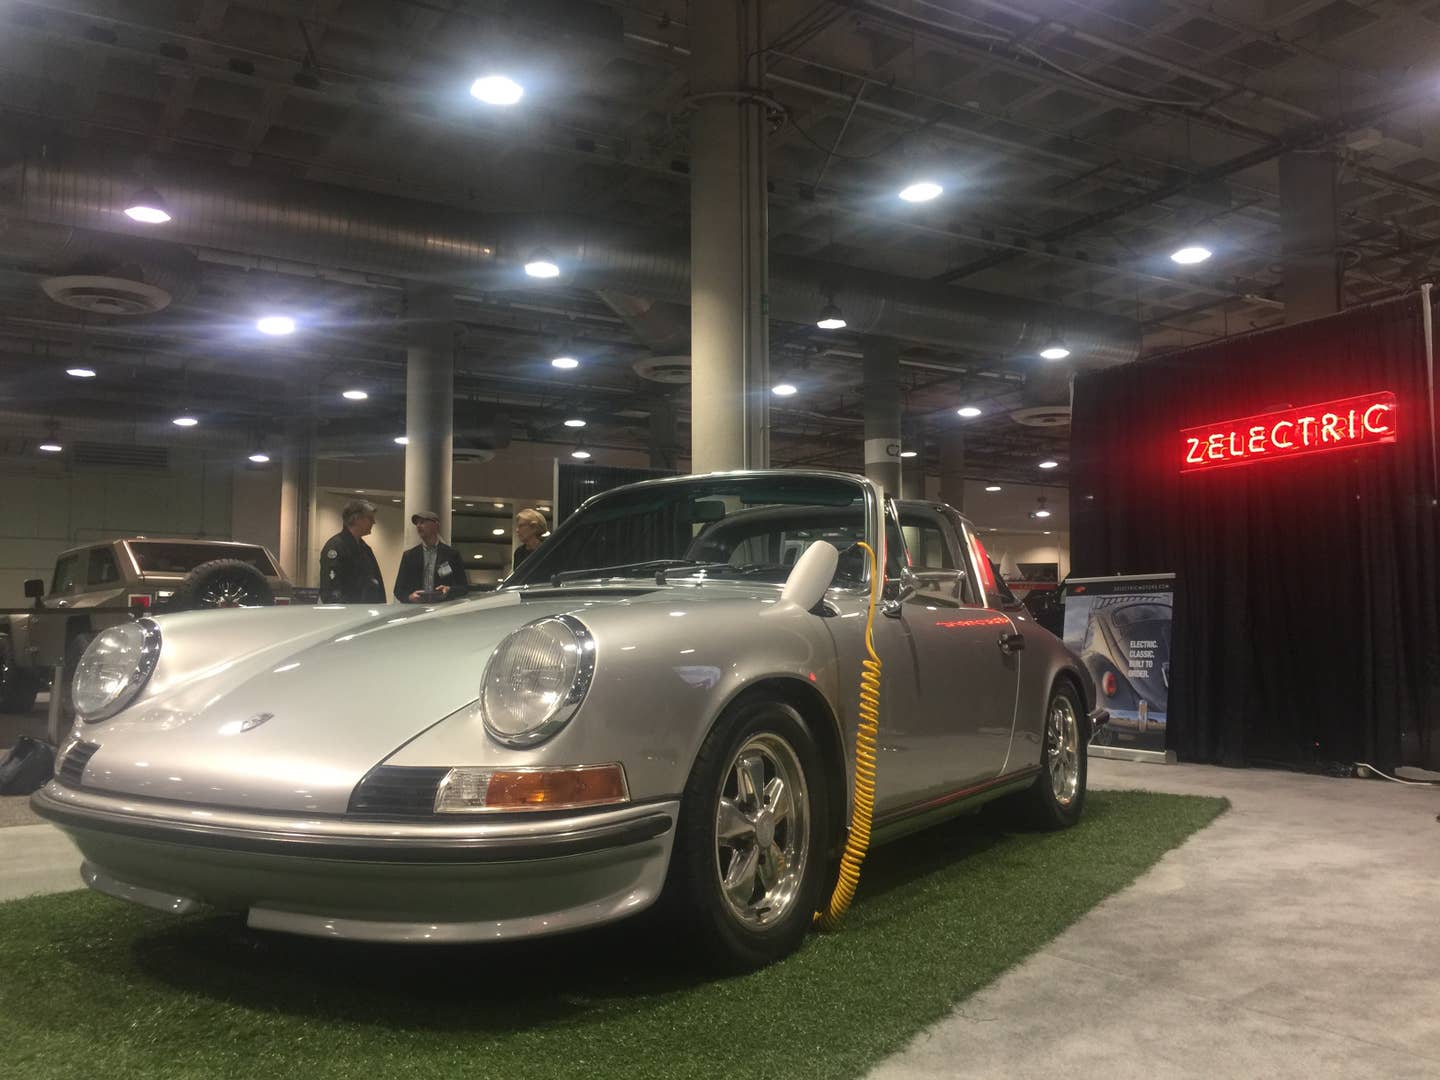 Zelectric Porsche 911